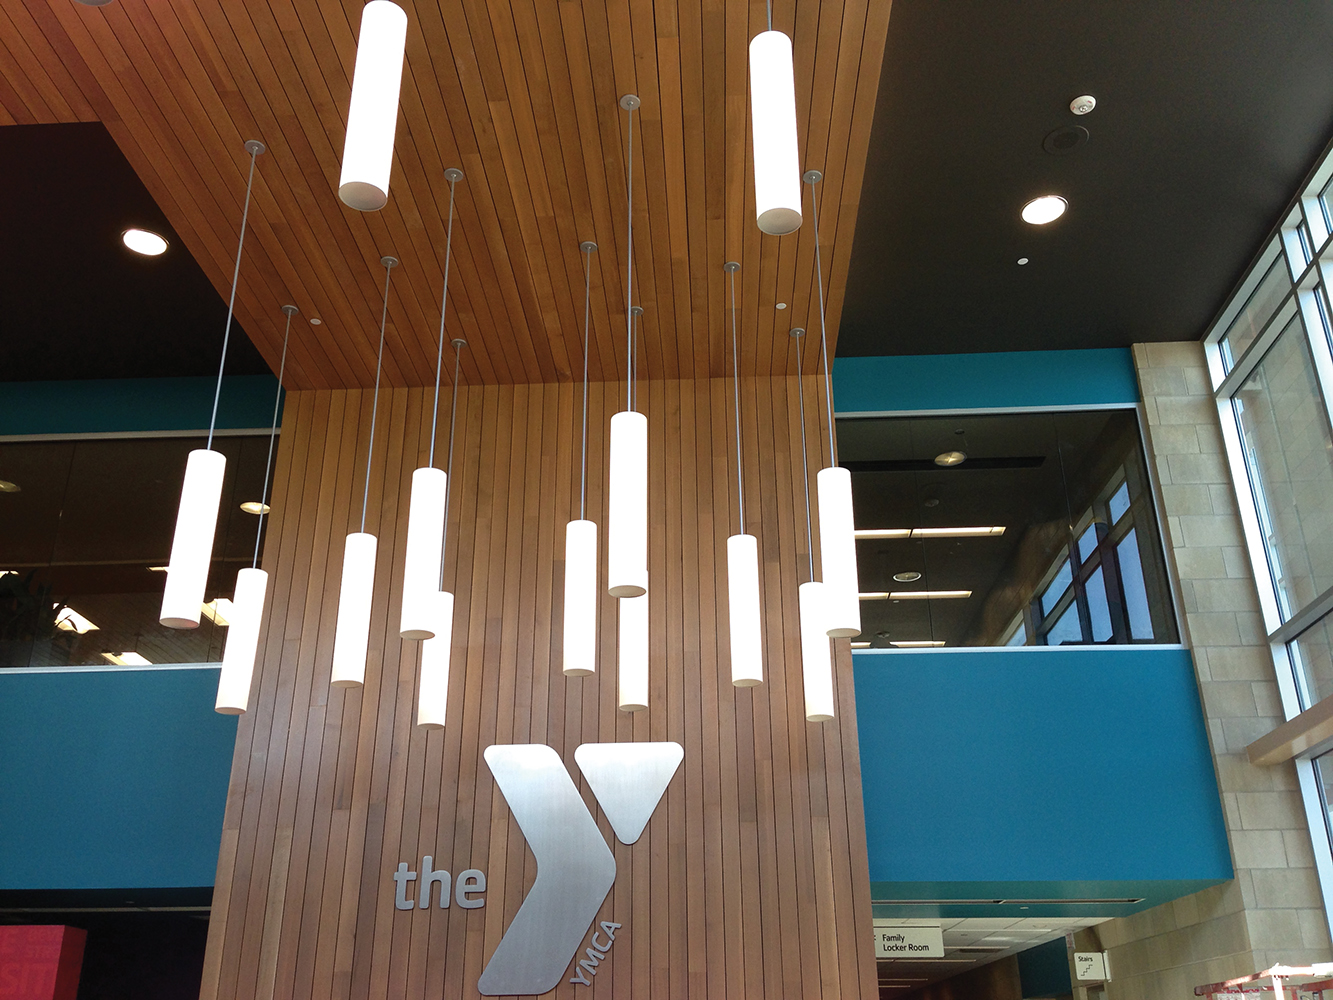 Sequence modern lighting fixtures illuminate a wood-paneled YMCA entryway.